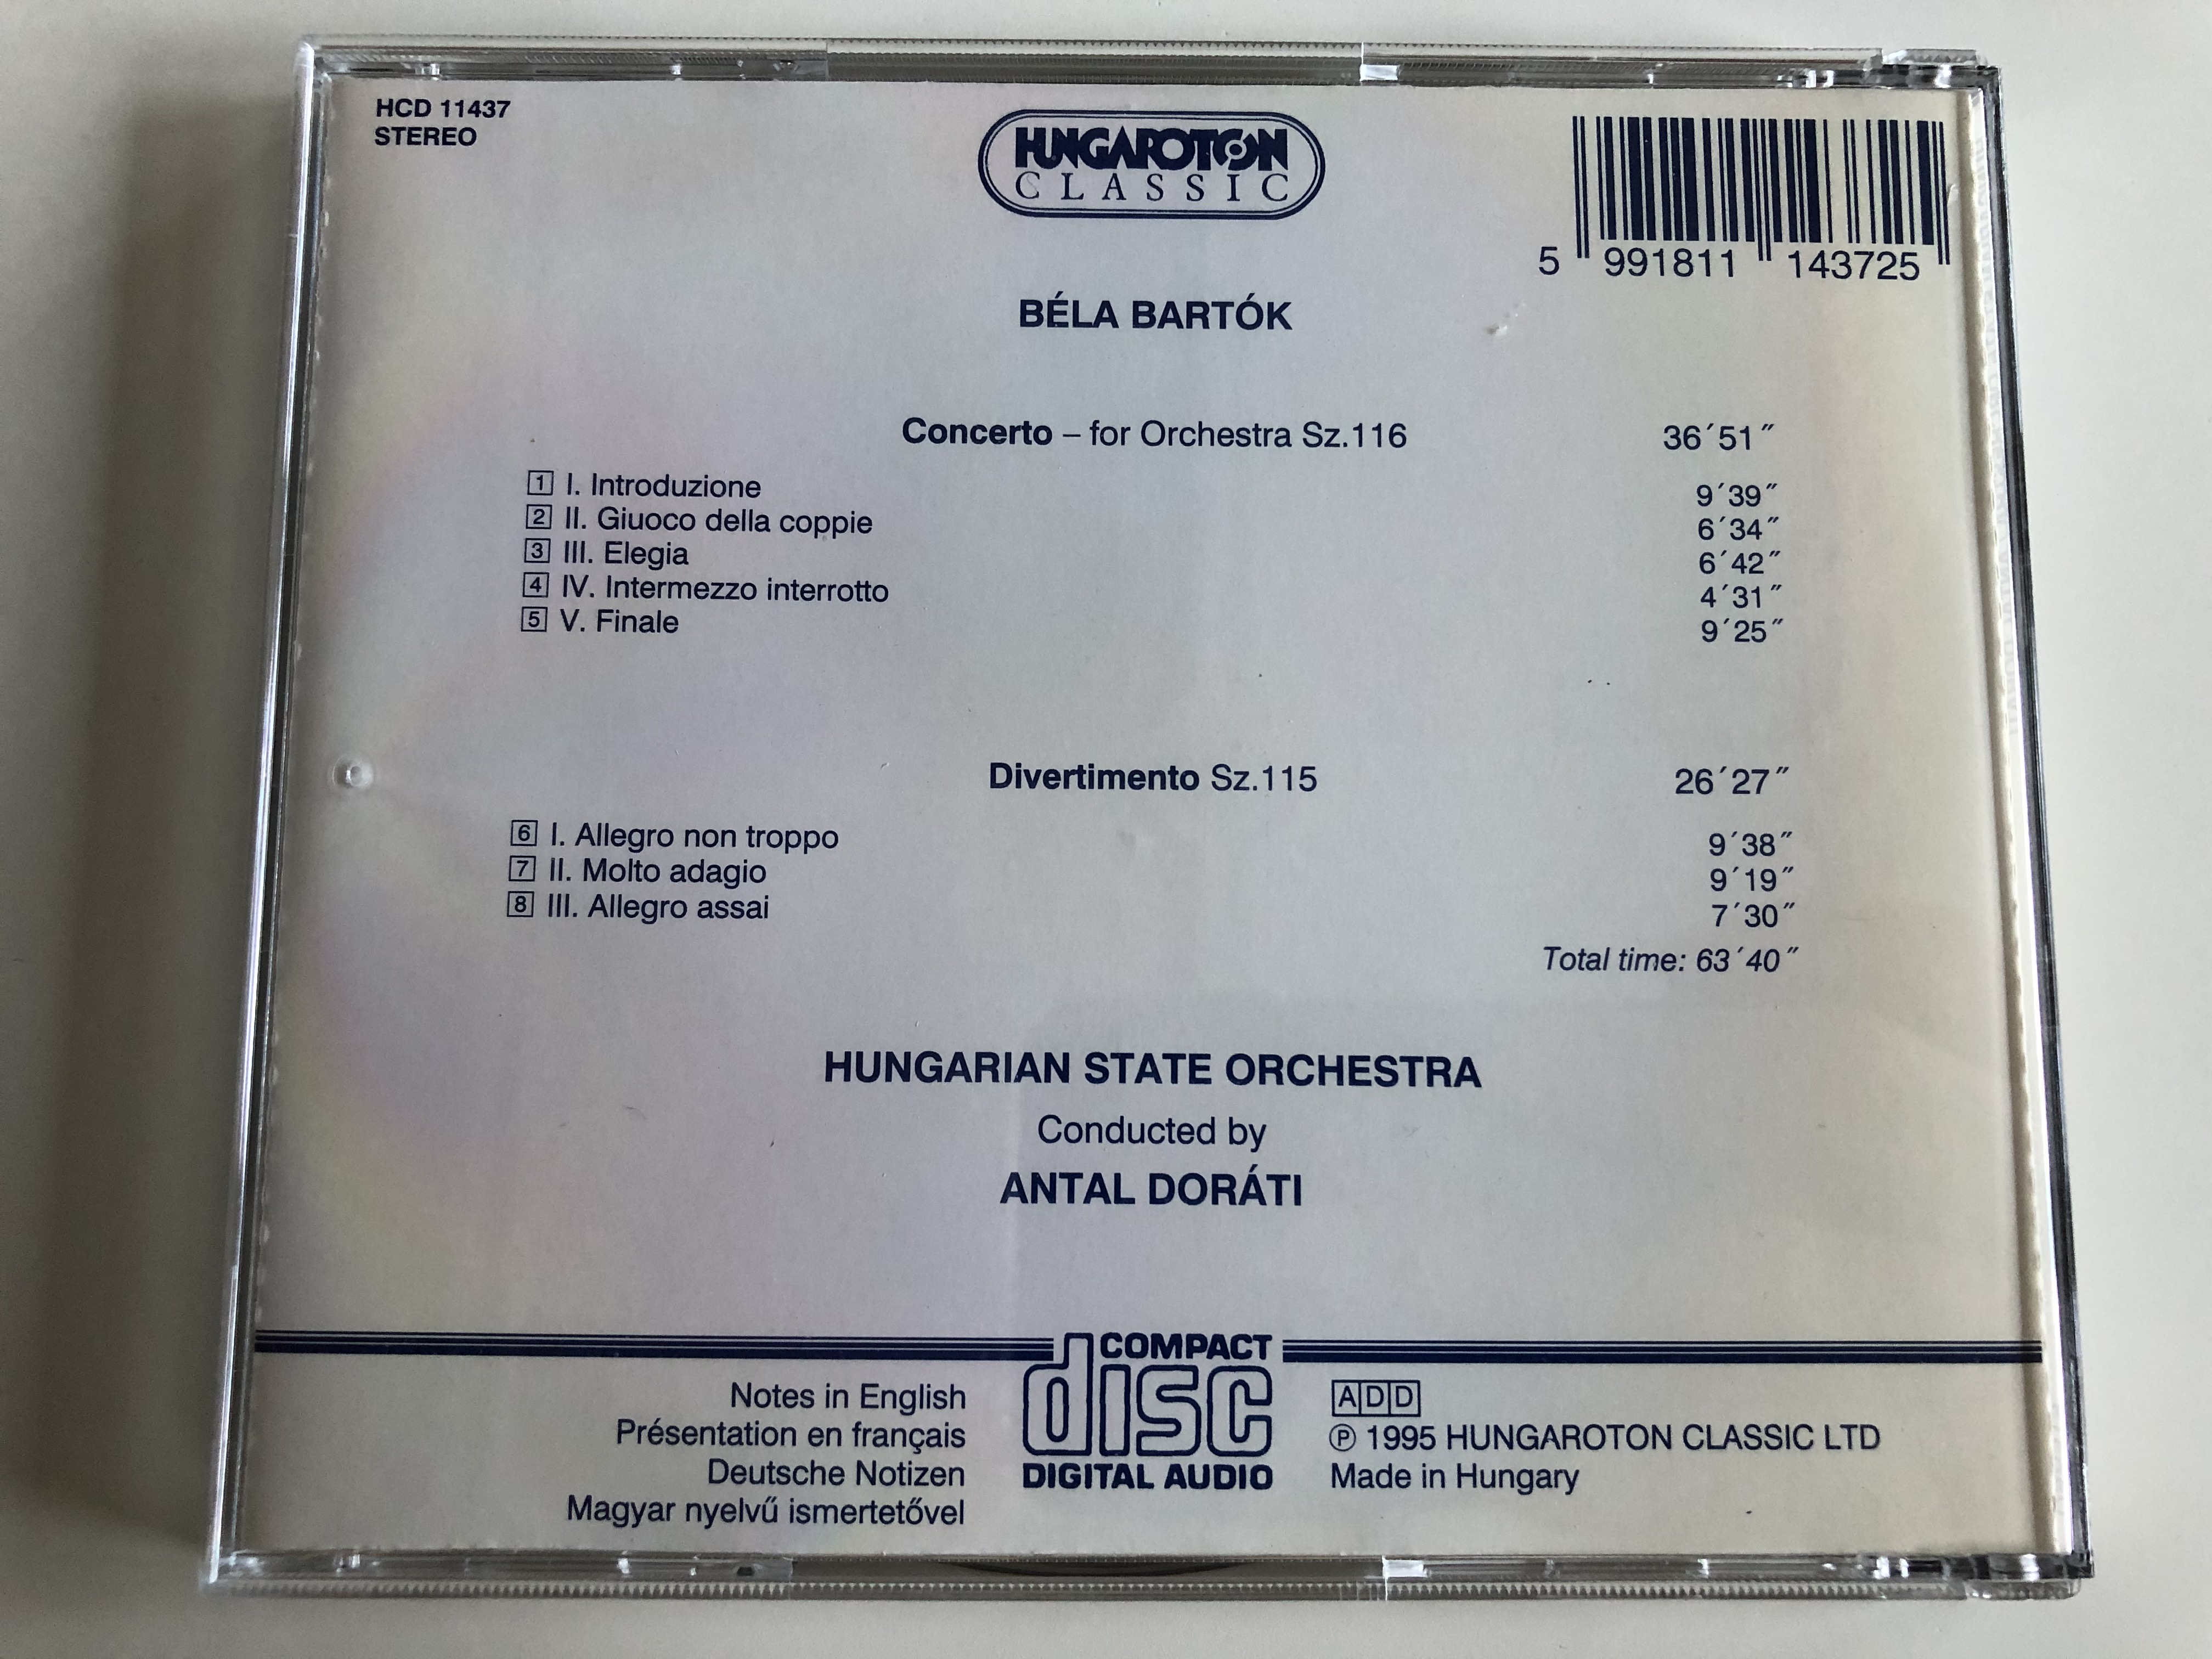 bart-k-b-la-concerto-for-orchestra-divertimento-hungarian-state-orchestra-antal-dor-ti-hungaroton-classic-audio-cd-1995-stereo-hcd-11437-8-.jpg